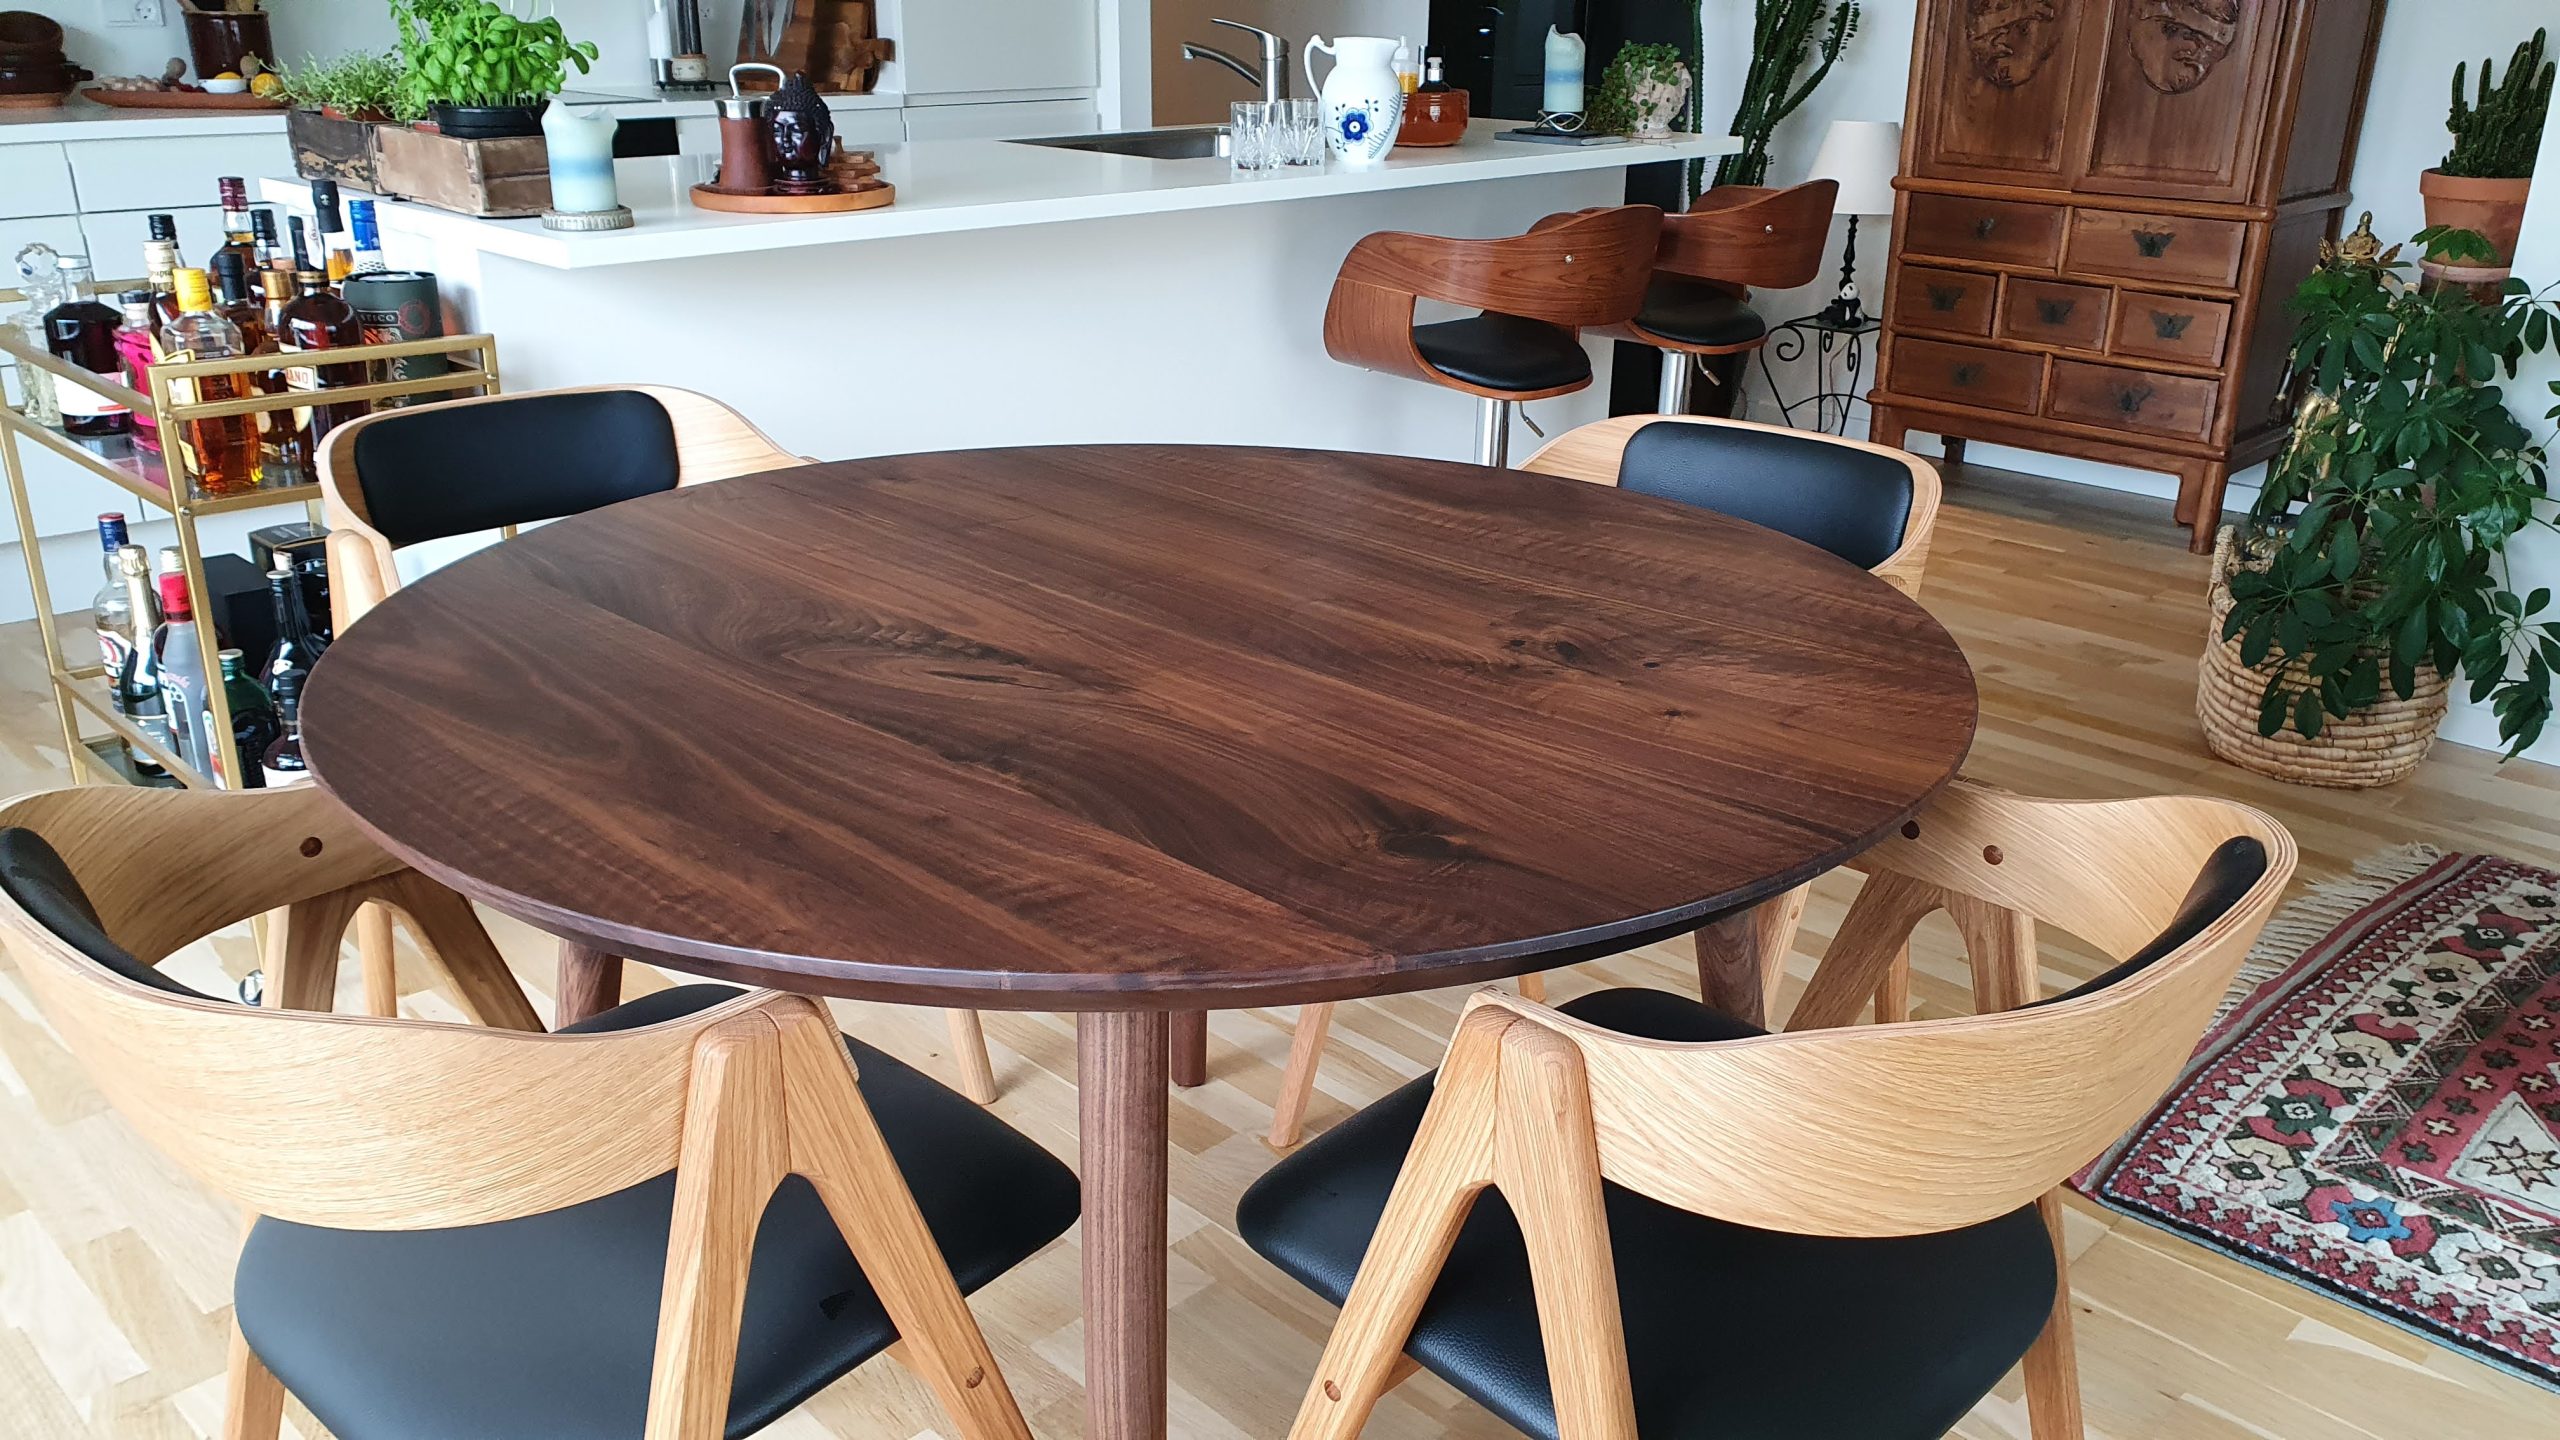 Round table 2021 Kaerbygård20210512 140709 1 scaled